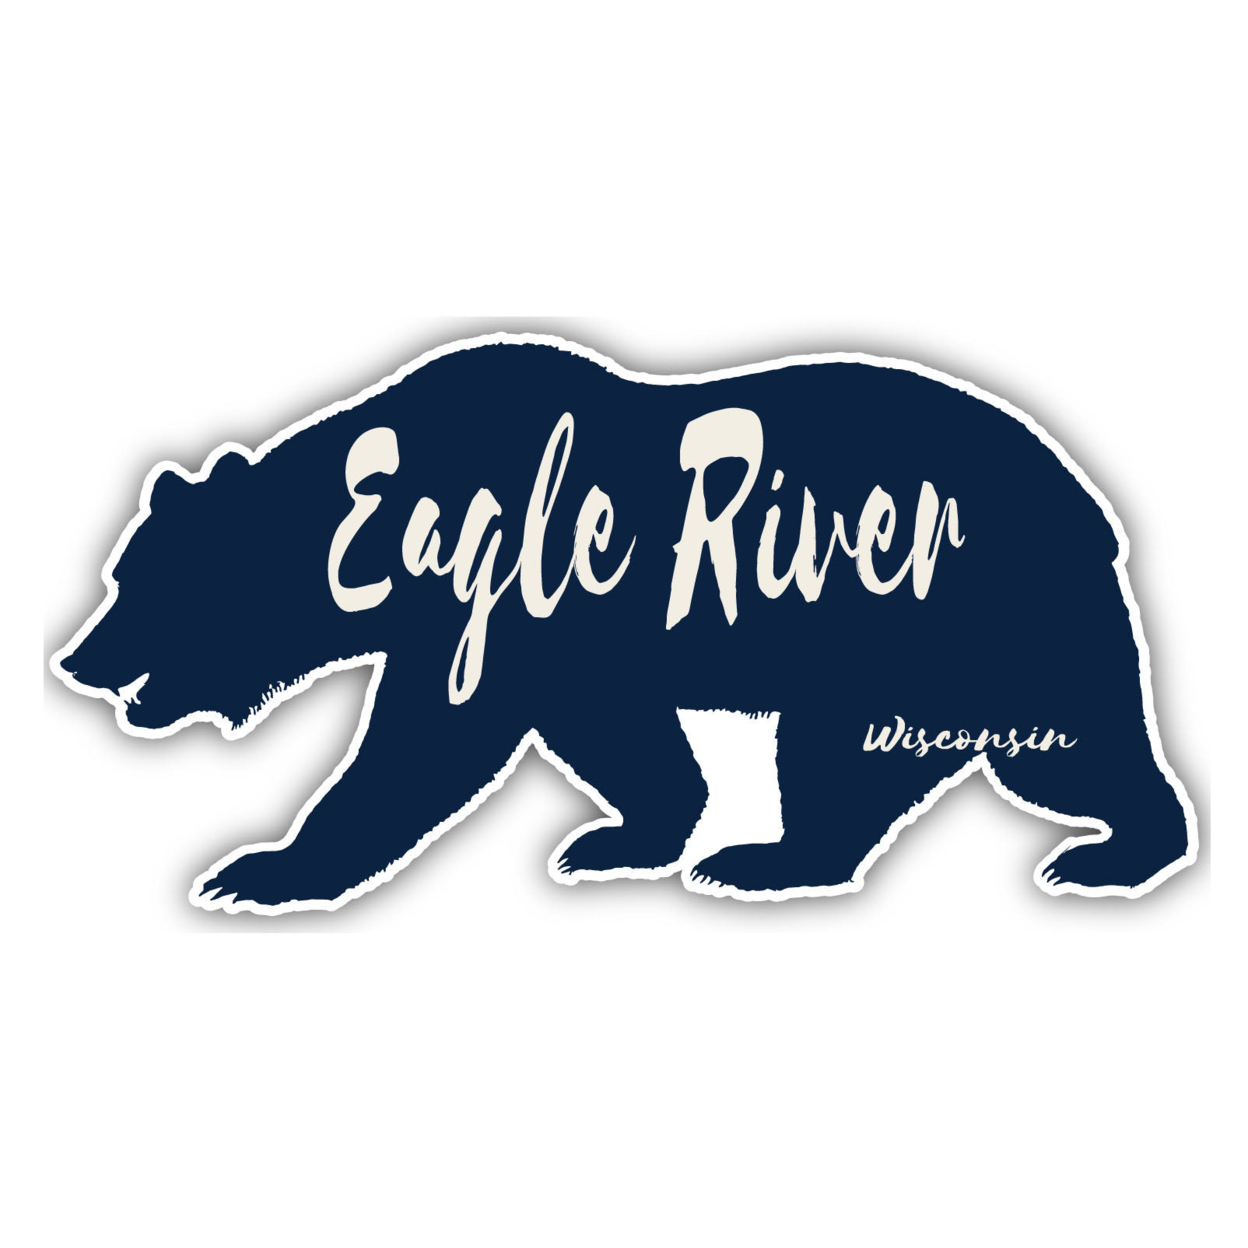 Eagle River Wisconsin Souvenir Decorative Stickers (Choose Theme And Size) - Single Unit, 2-Inch, Bear